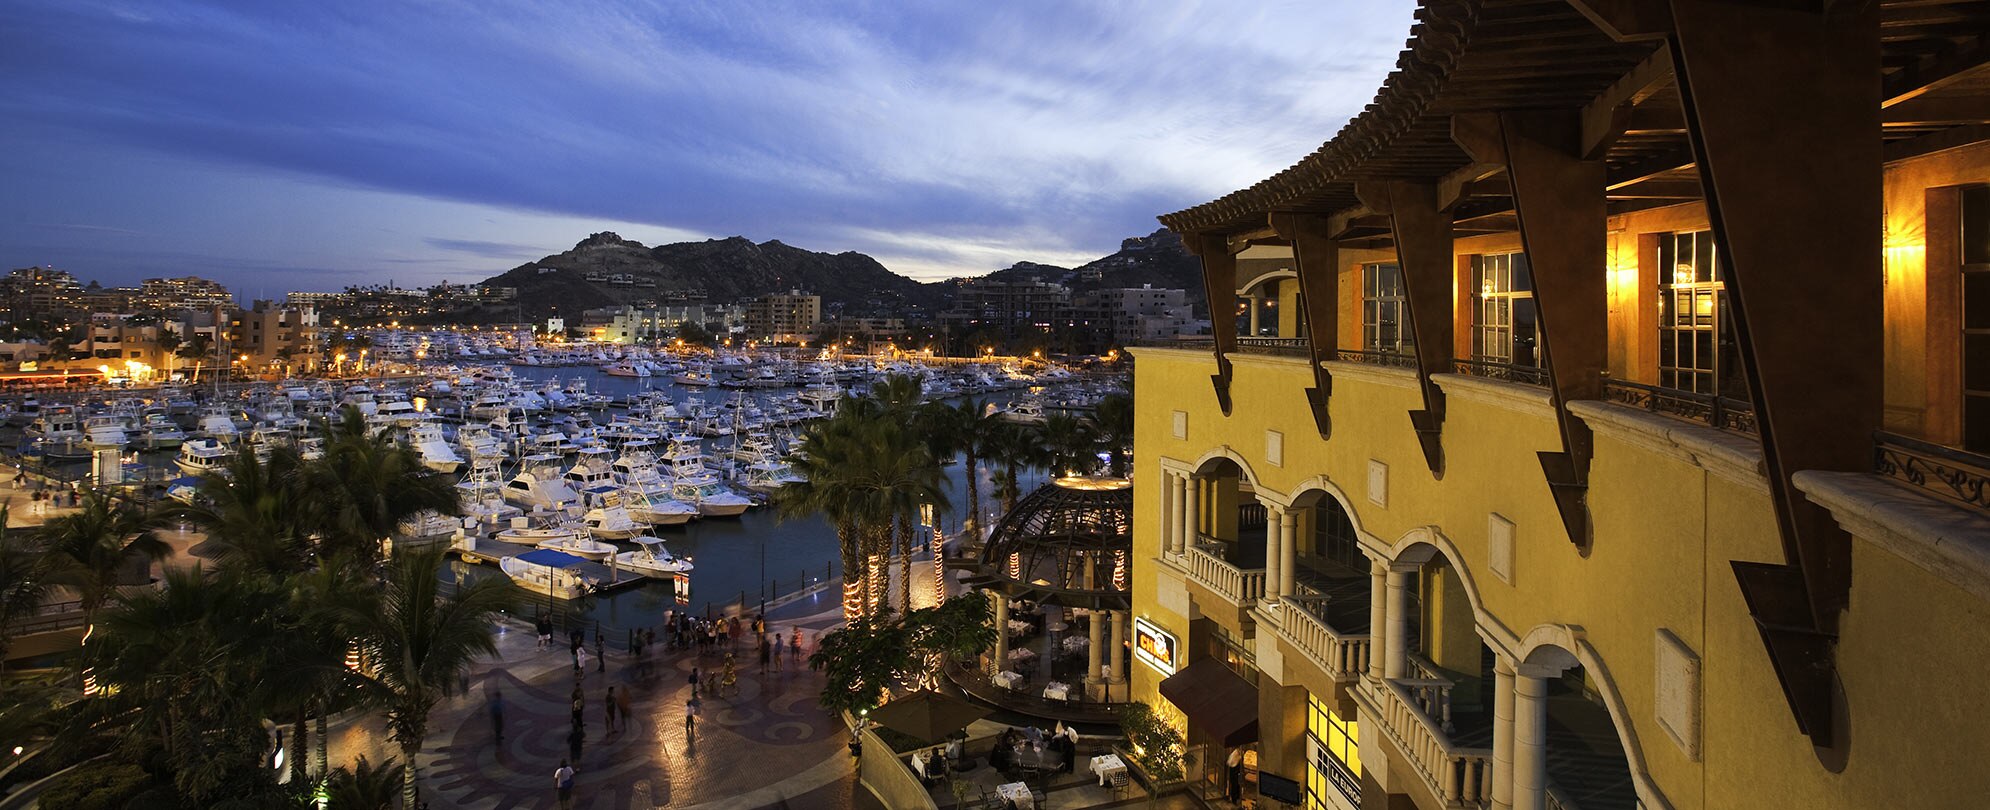 Cabo San Lucas, a resort city on the southern tip of Mexico’s Baja California peninsula.